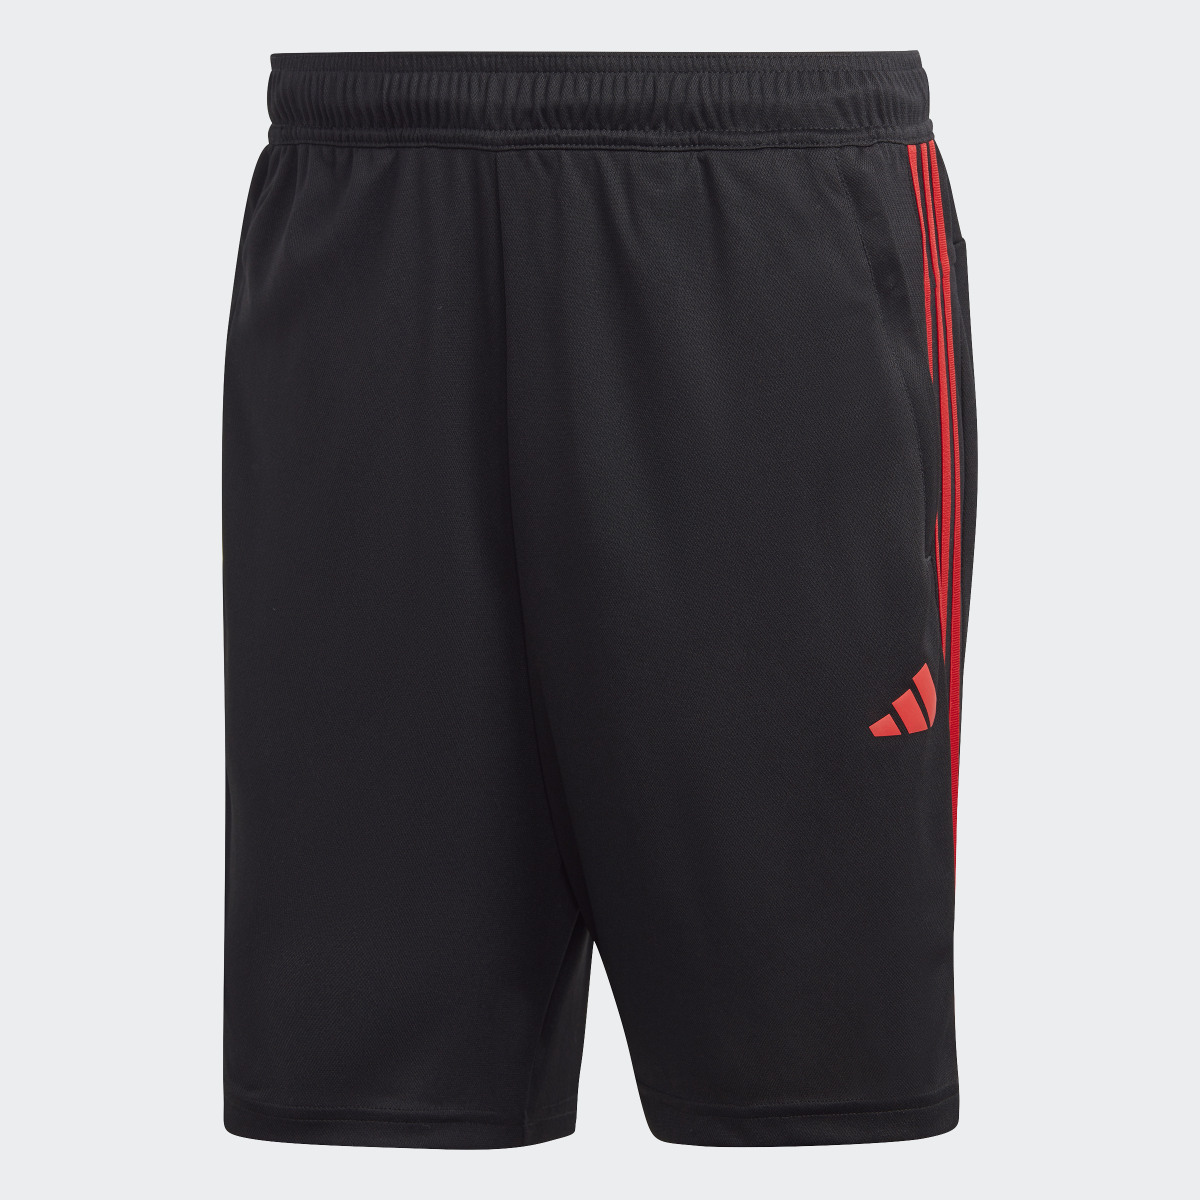 Adidas Train Essentials Piqué 3-Stripes Training Shorts. 4